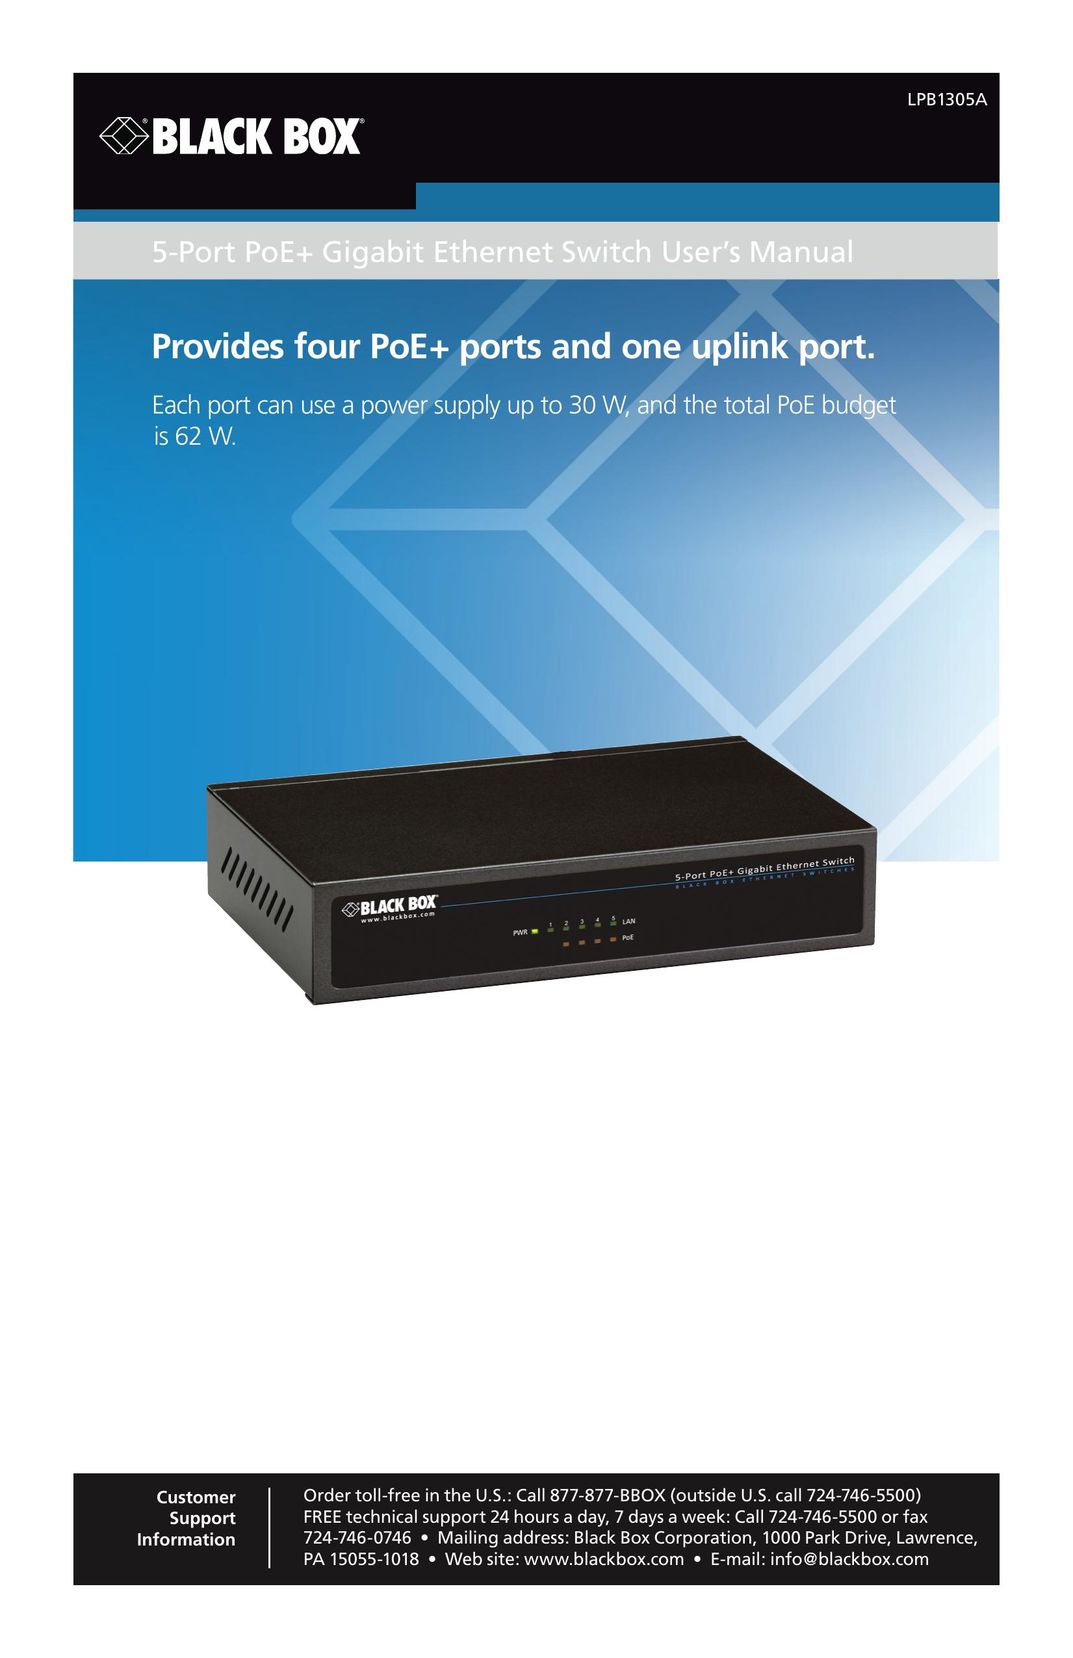 Black Box 5-Port POE+ Gigabit Ethernet Switch Computer Hardware User Manual